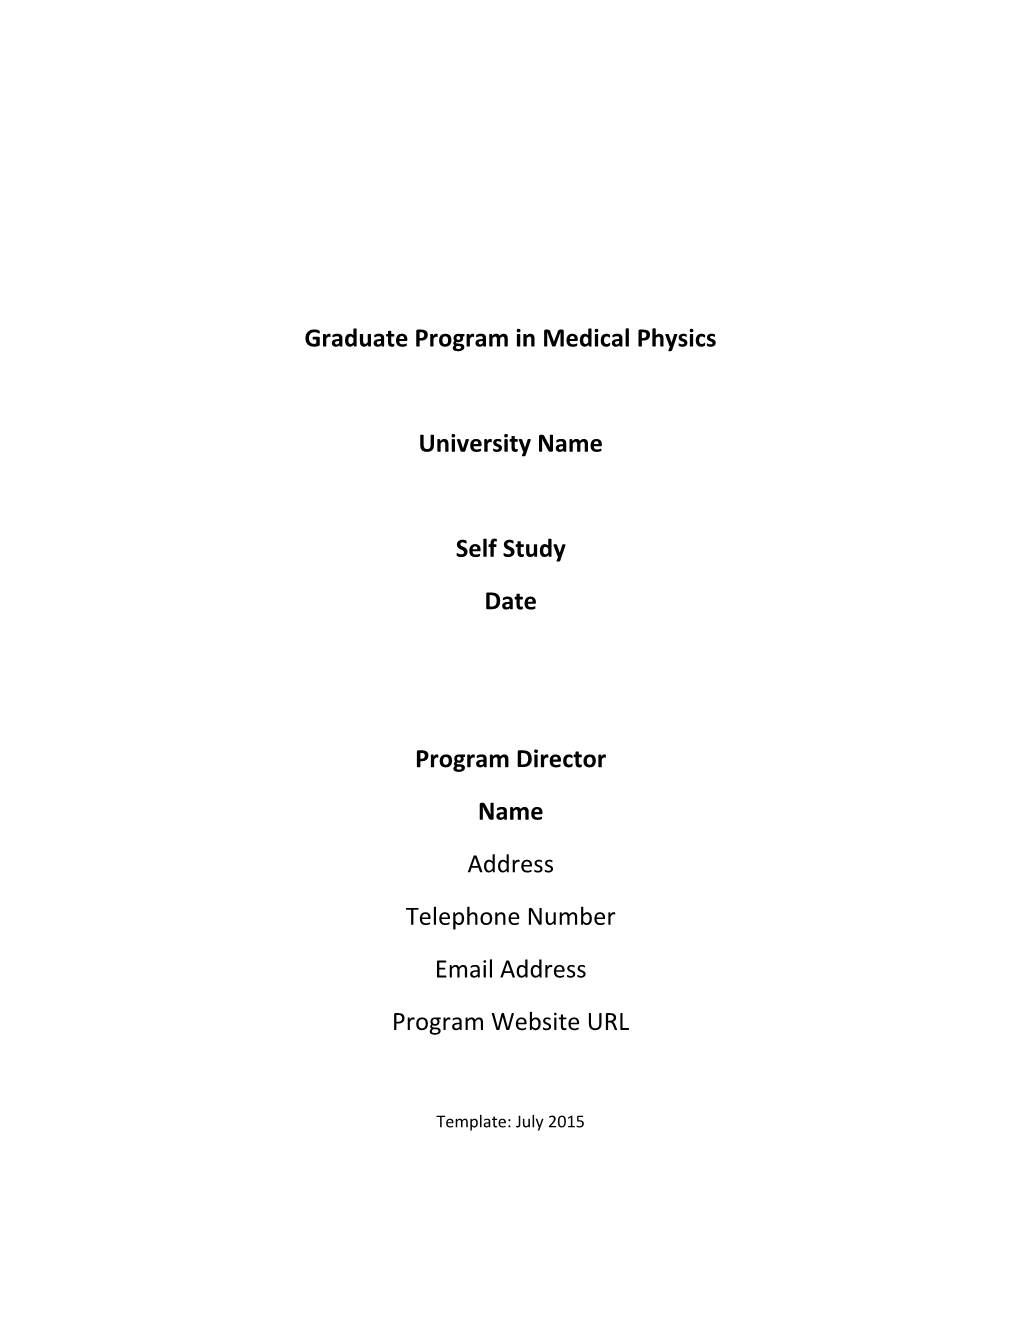 Graduate Program in Medical Physics